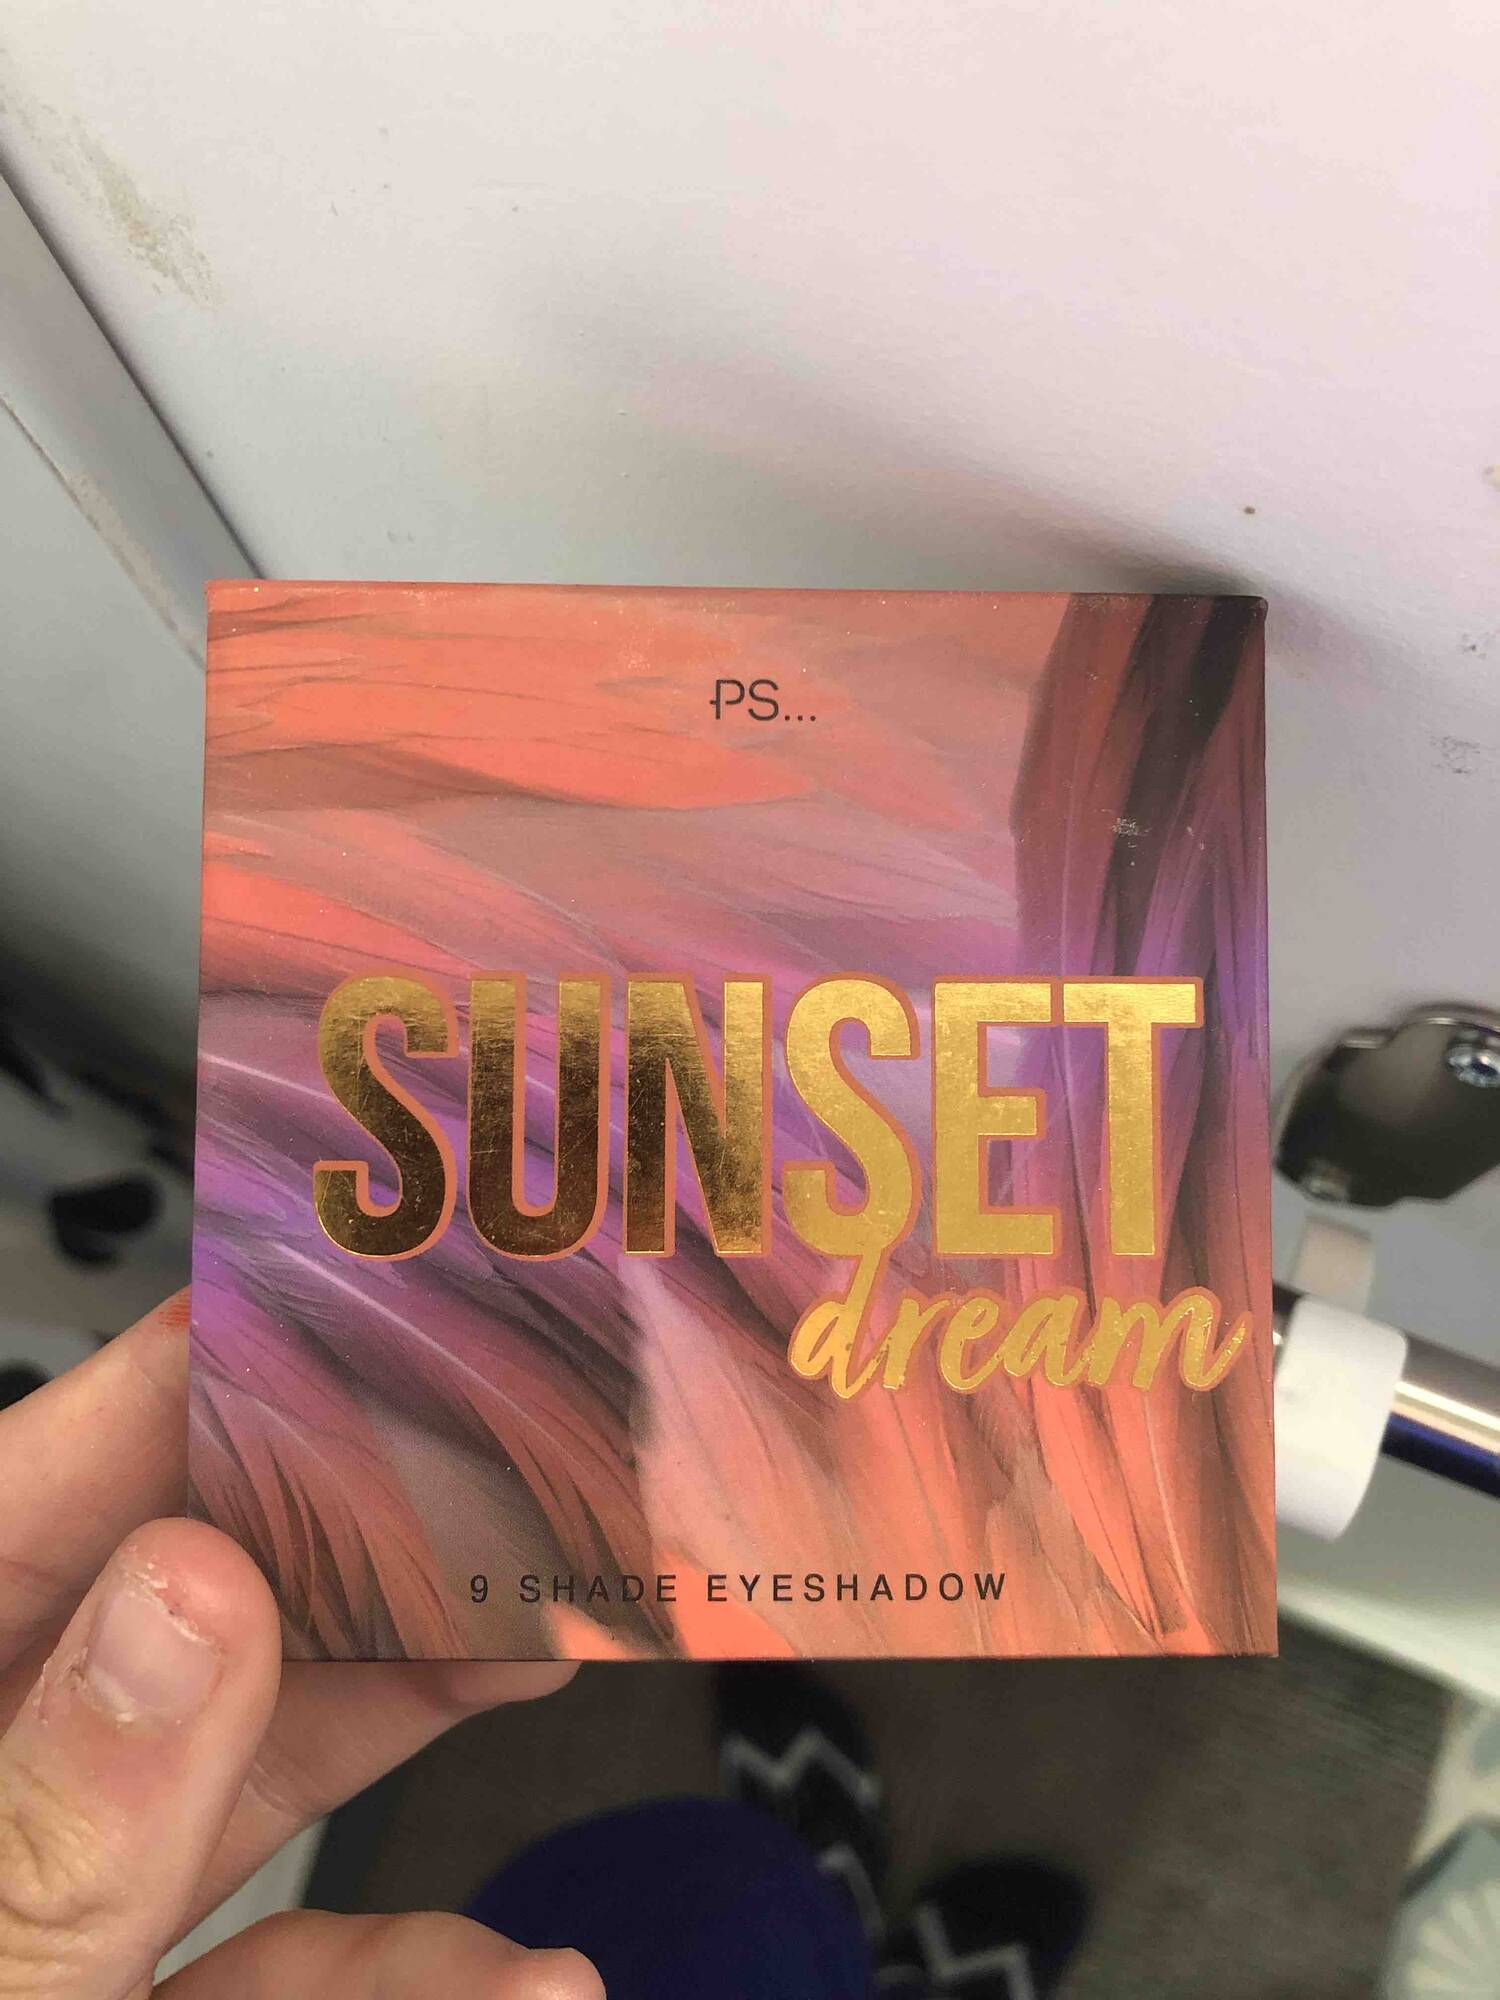 PRIMARK - PS... Sunset dream - 9 shade eyeshadow